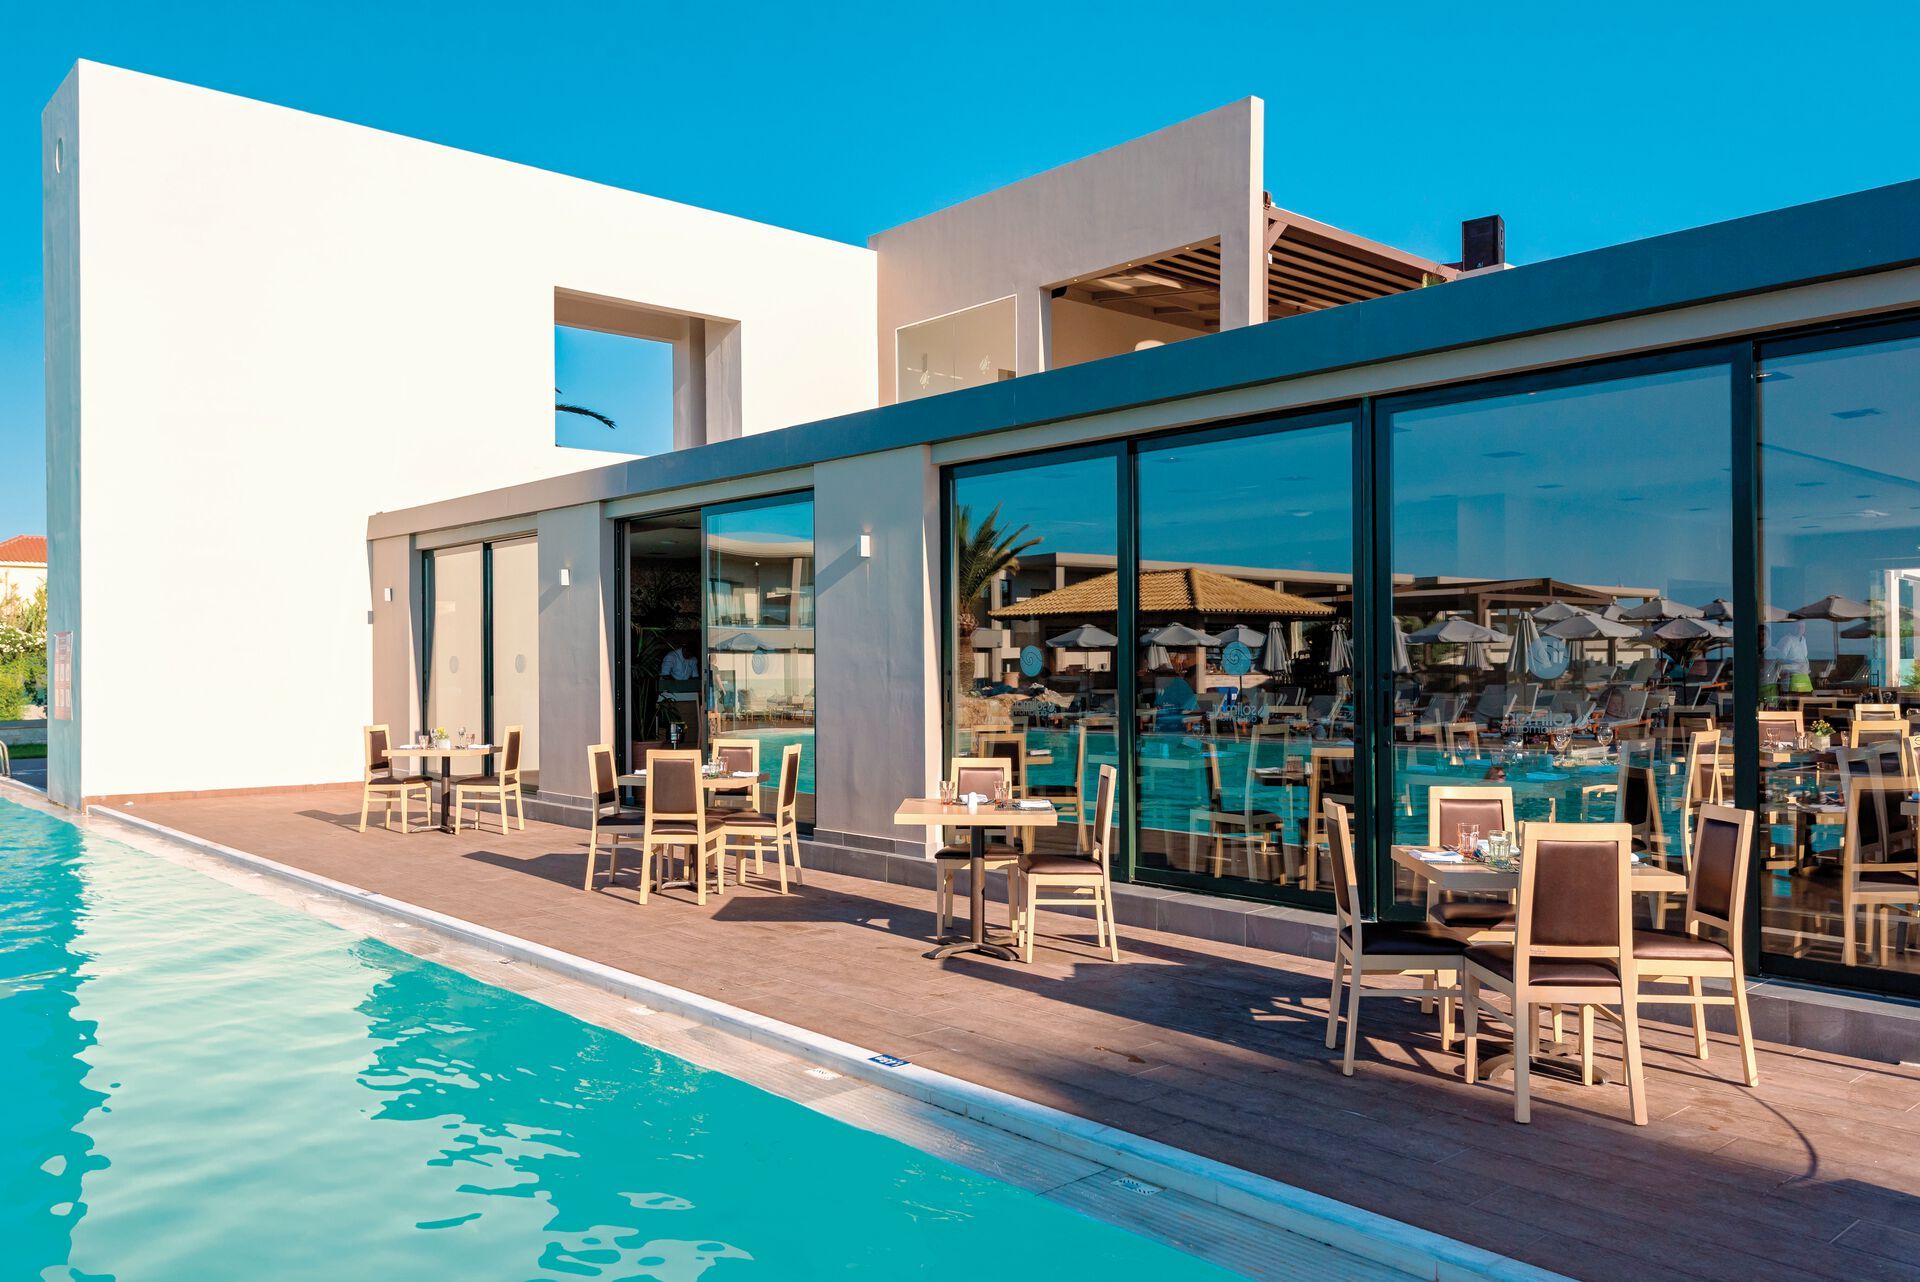 Crète - La Canée - Grèce - Iles grecques - Hotel Solimar Aquamarine Hotel 4*